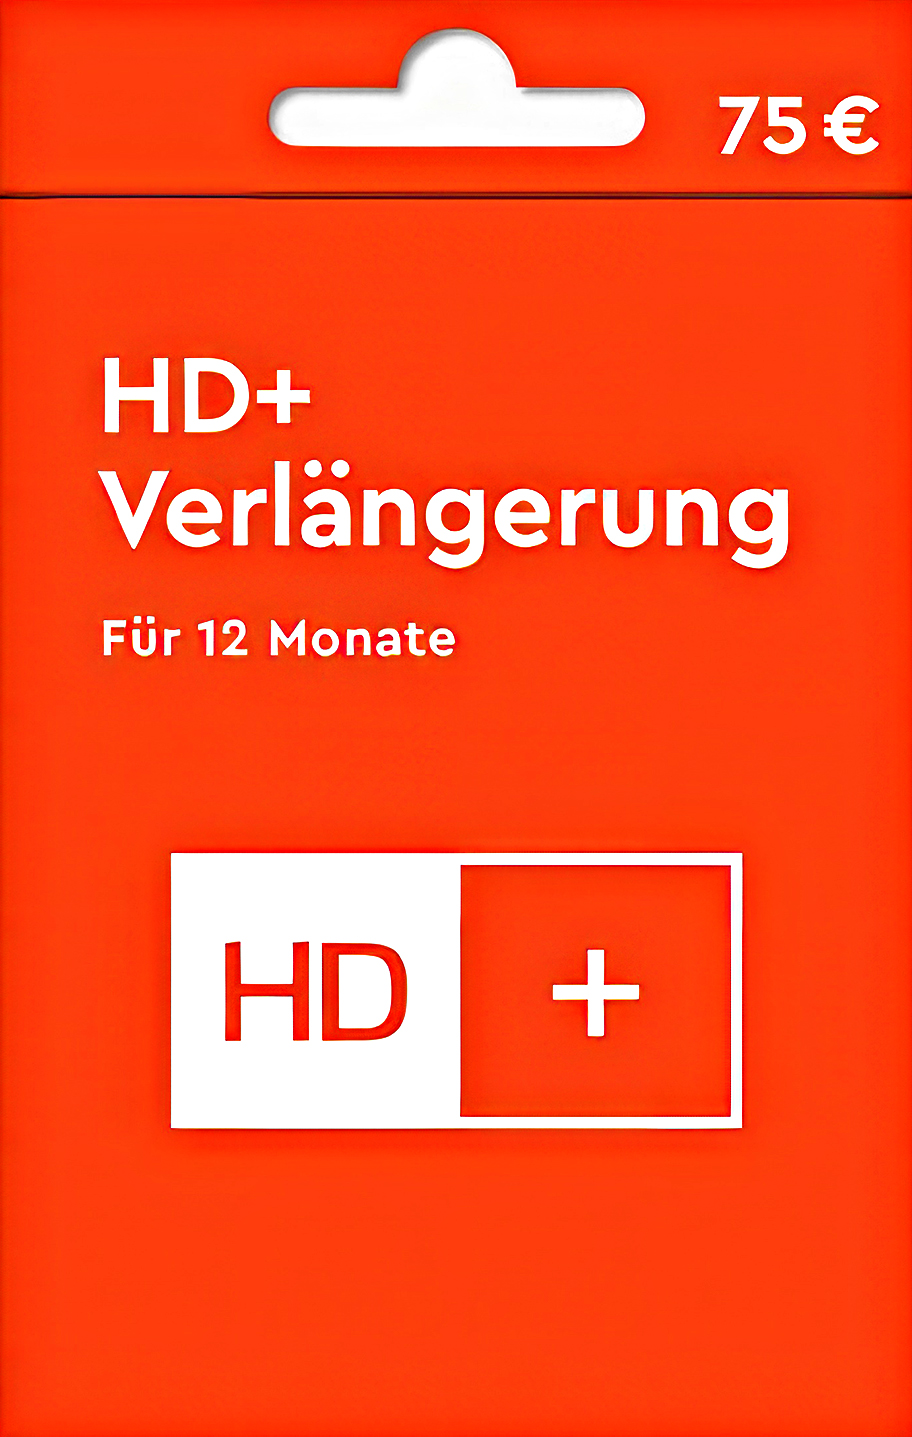 HD+ PLUS Verlängerung per E-Mail - 12 Monate verlängern | 24/7 Service Zusendung per E-Mail passend für alle HD+ Karten HD+ TV-Keys und alle aktuellen Geräte wo HD+ bereits fest drin integriert ist